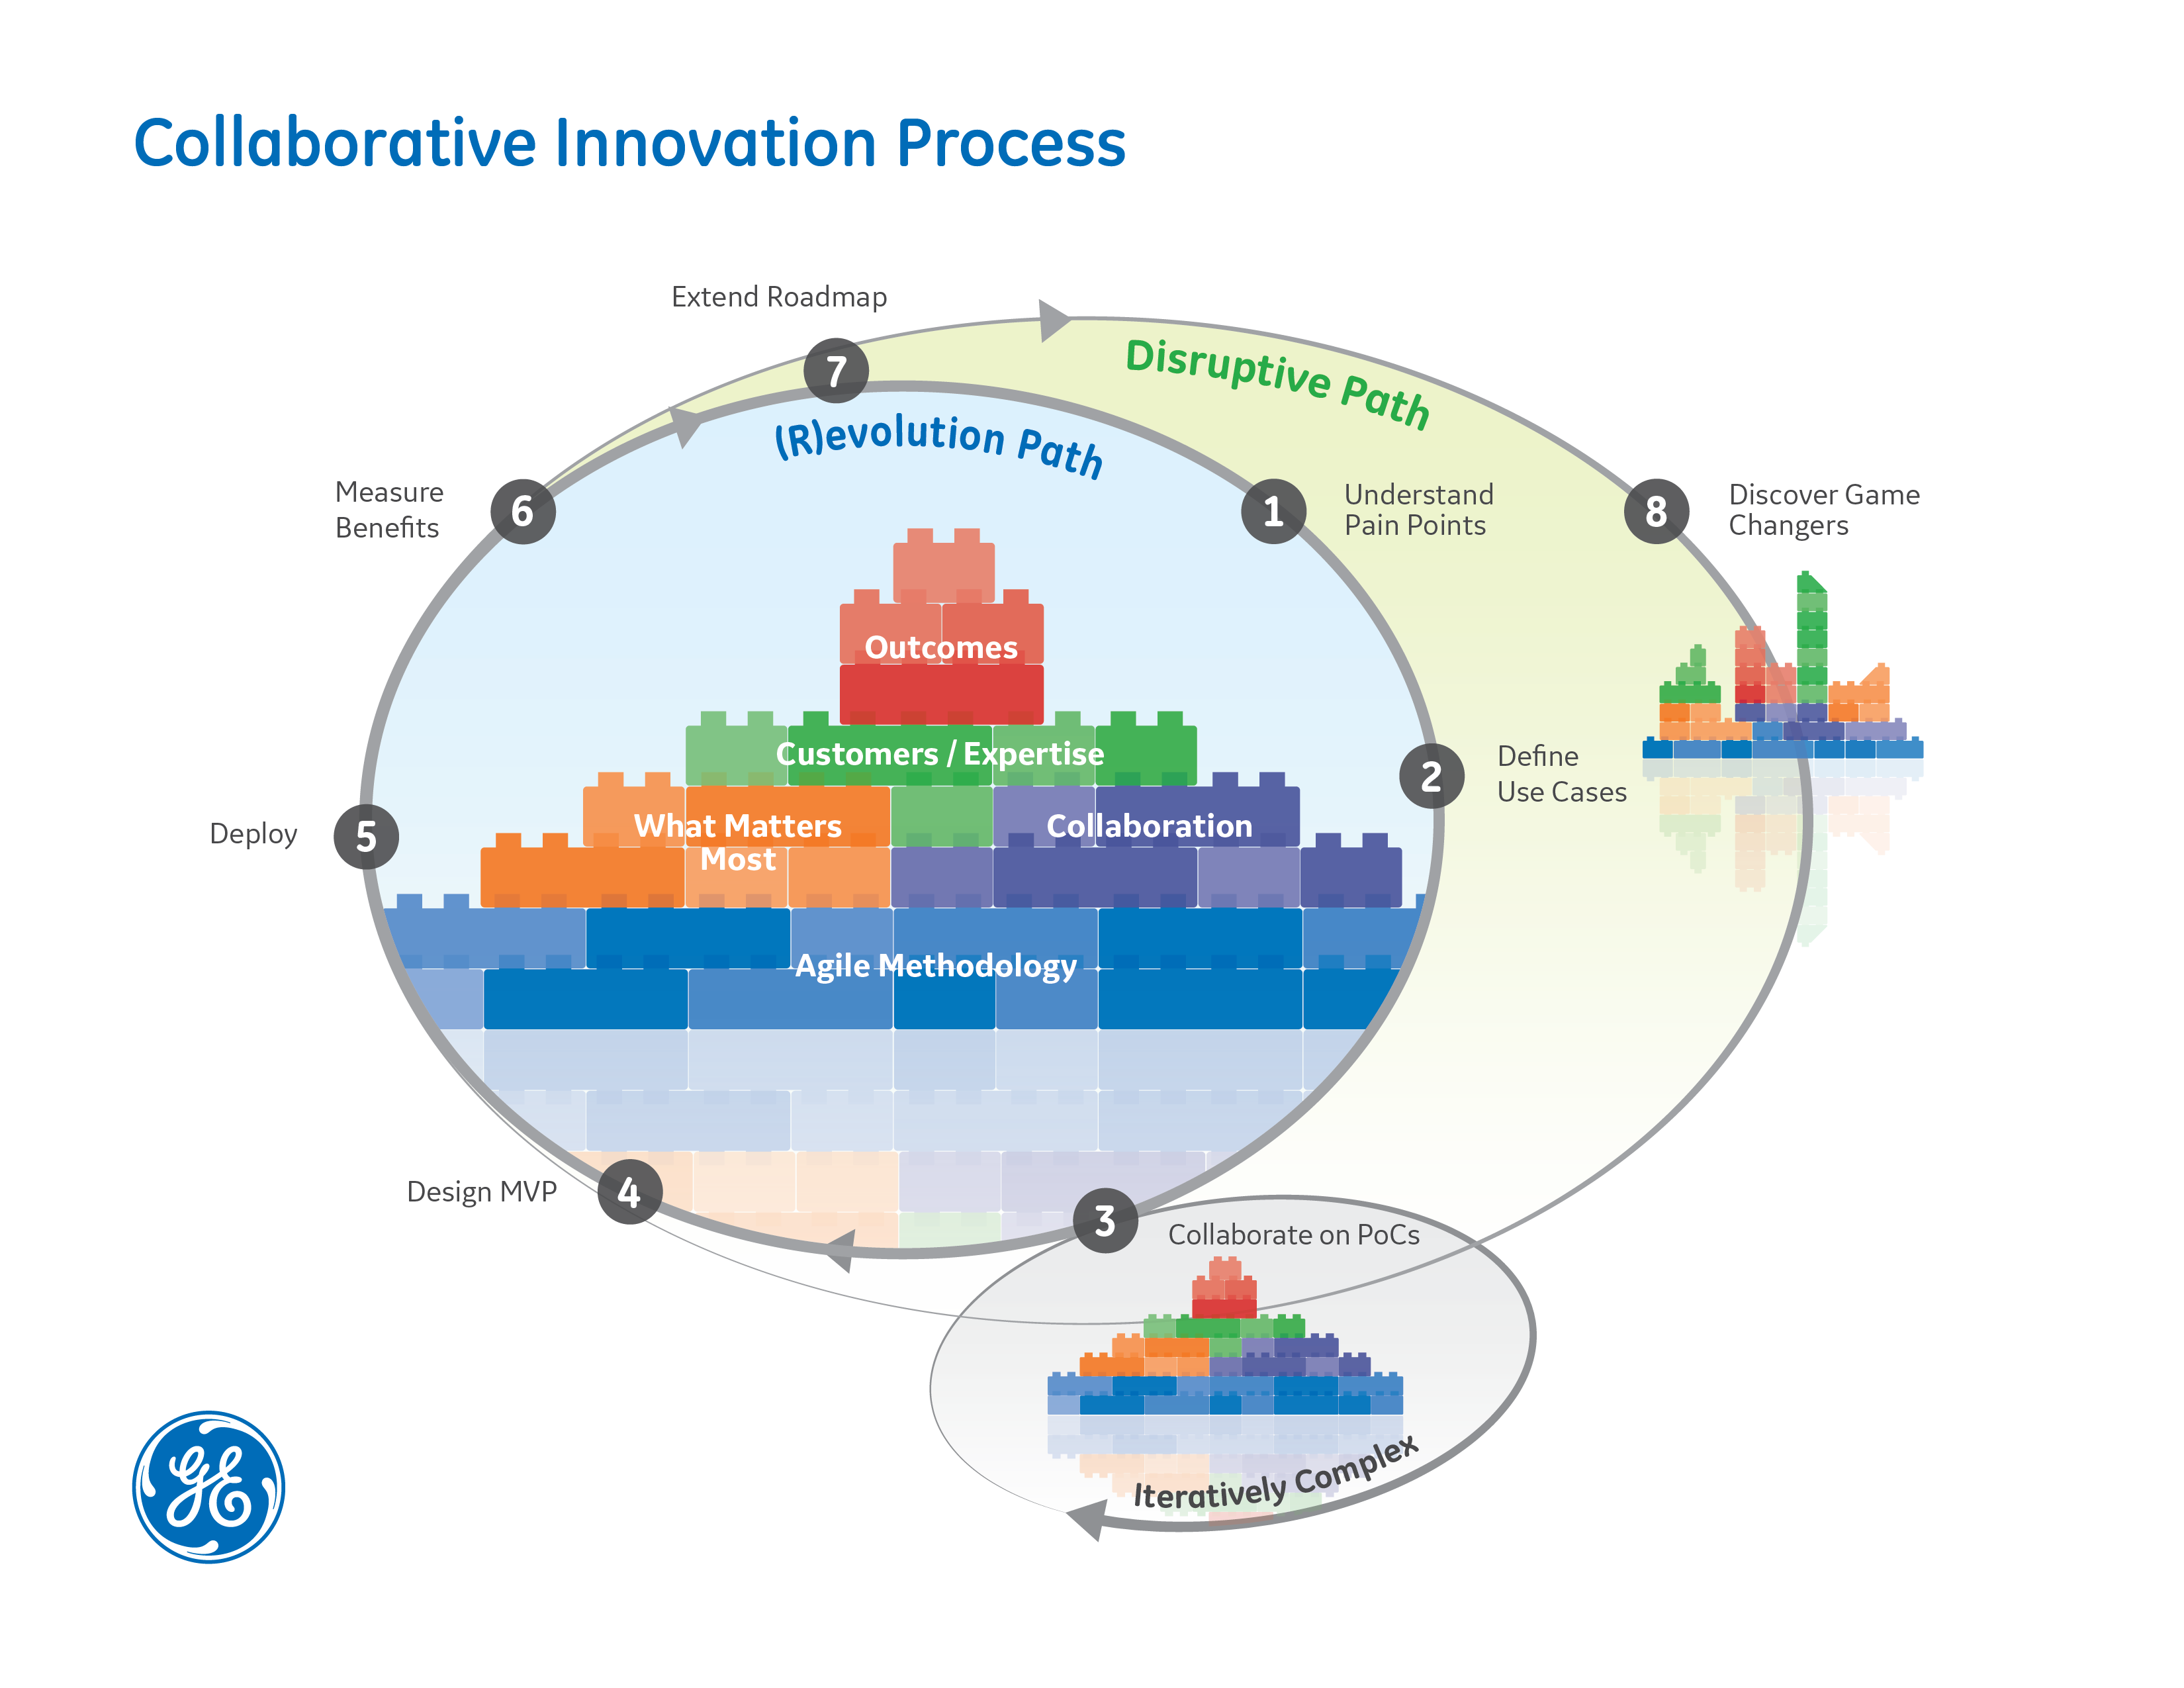 GE's collaborative innovation framework